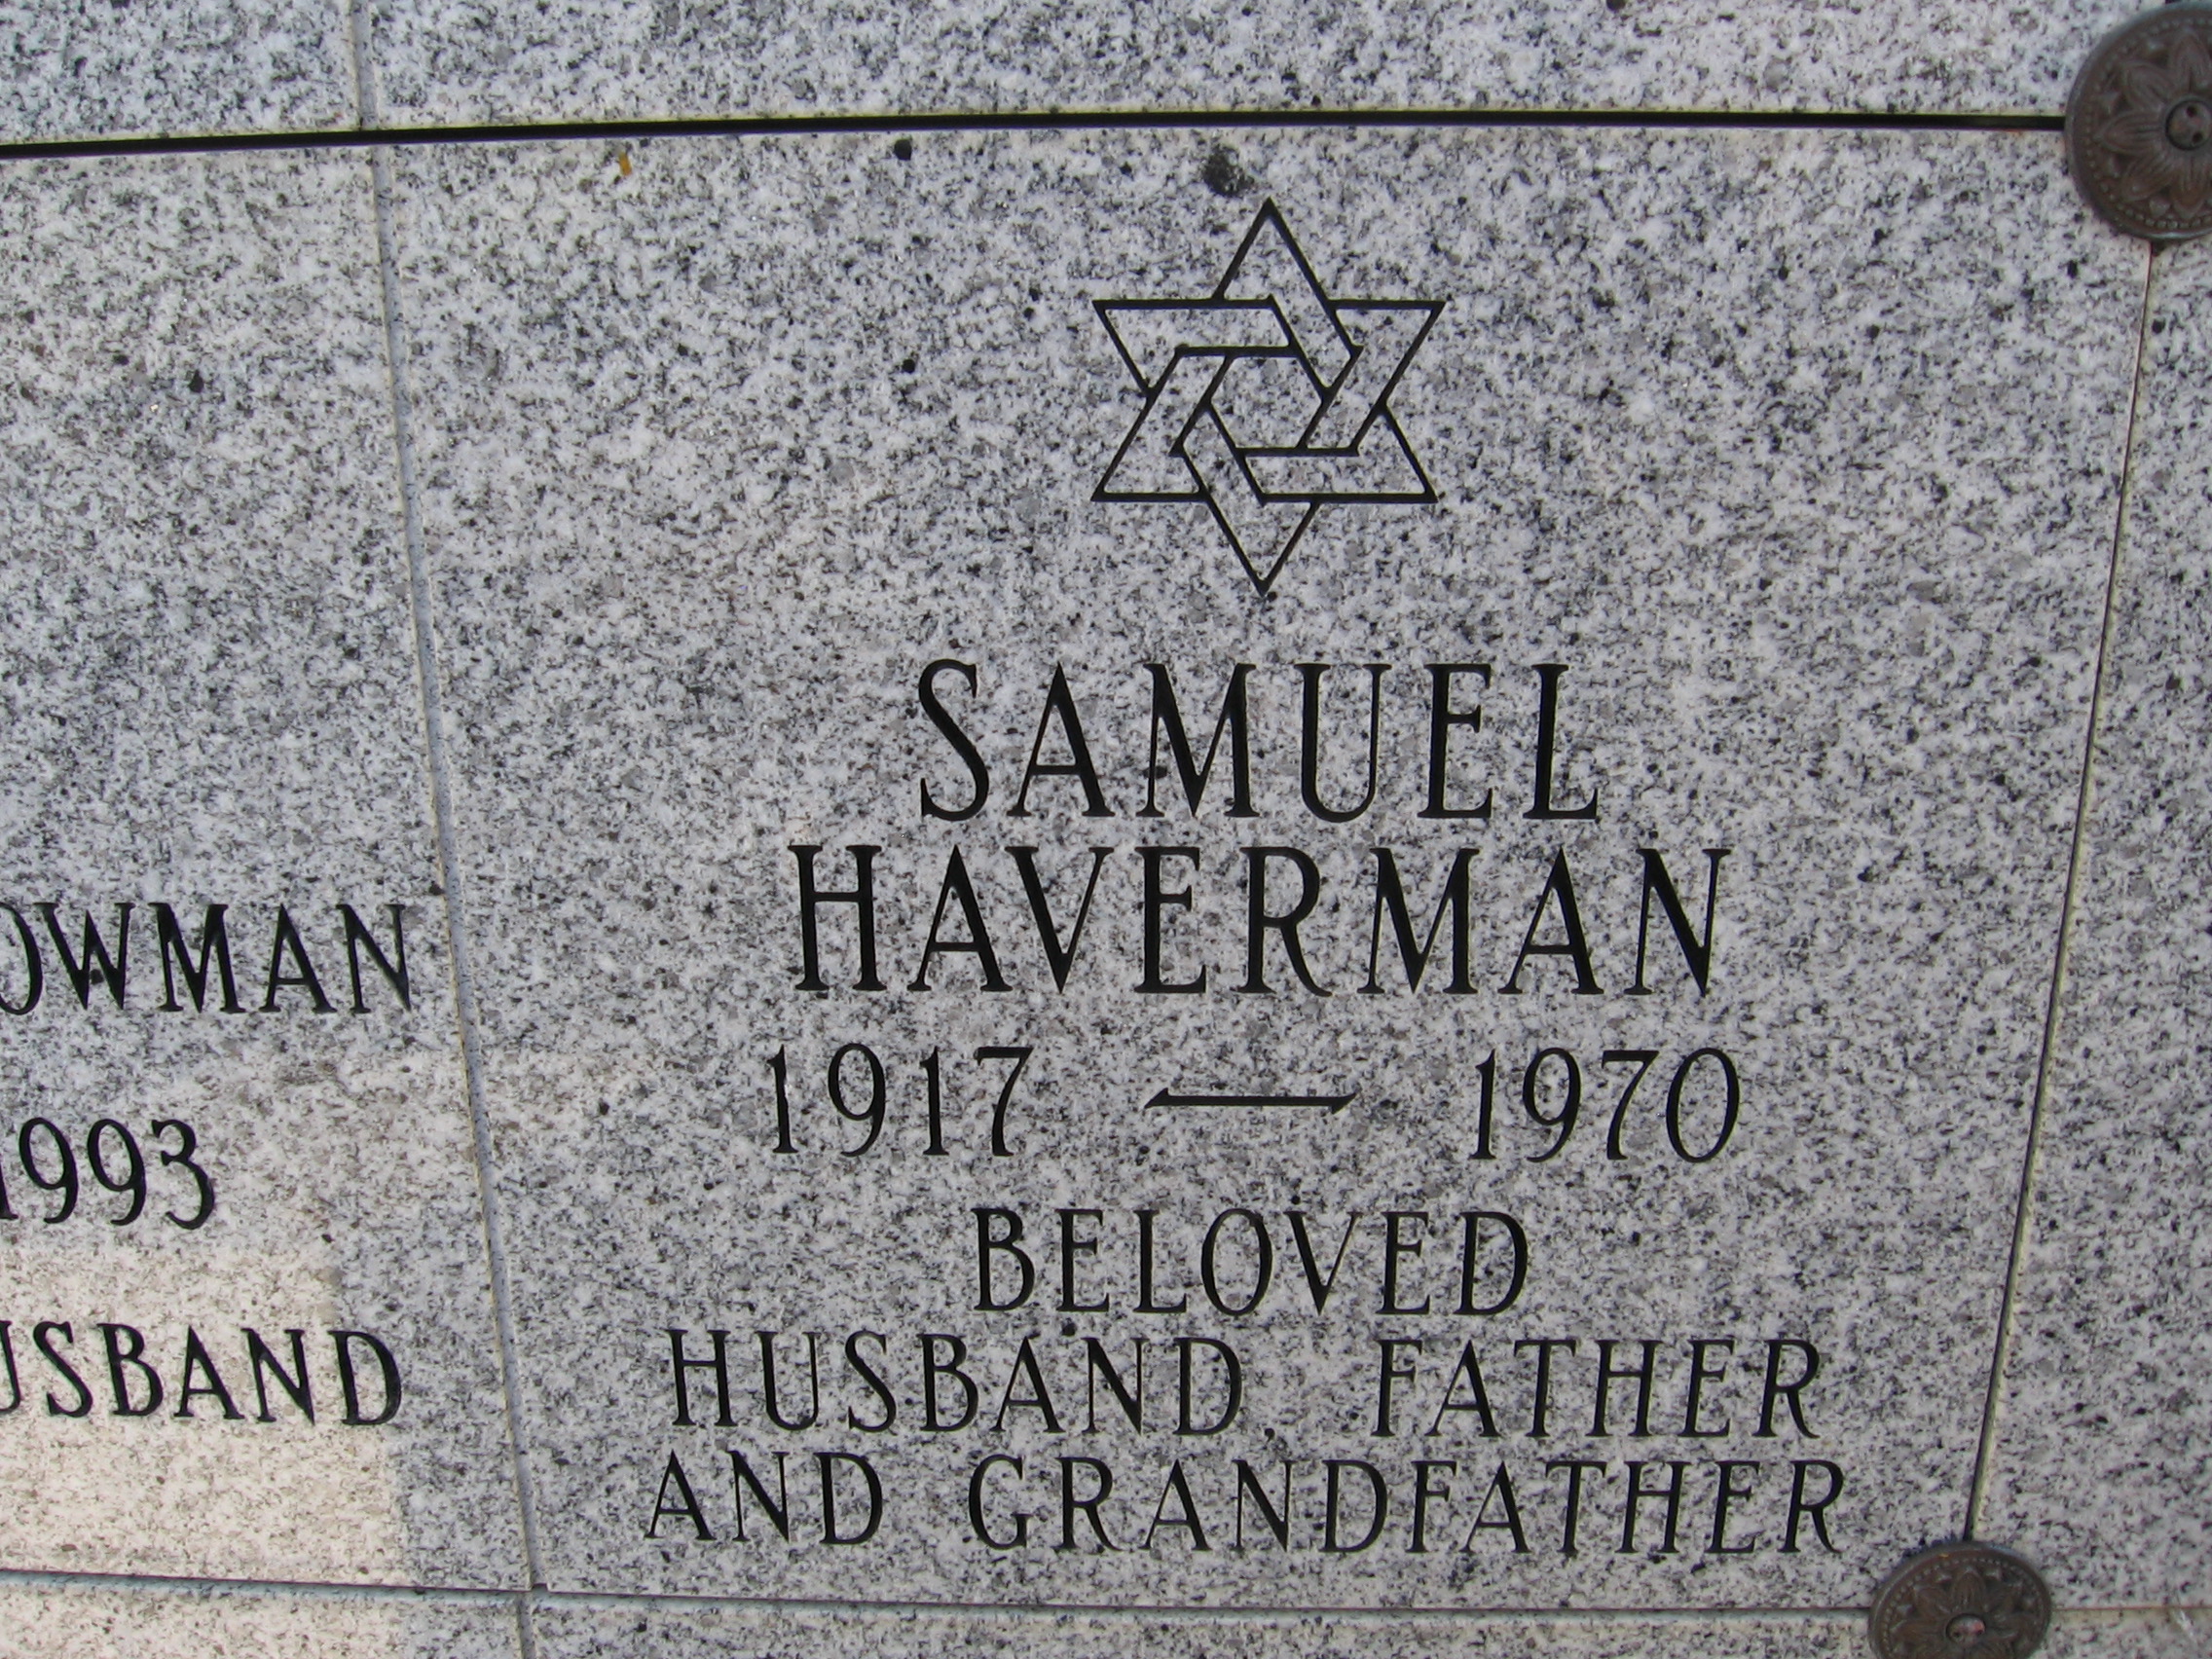 Samuel Haverman